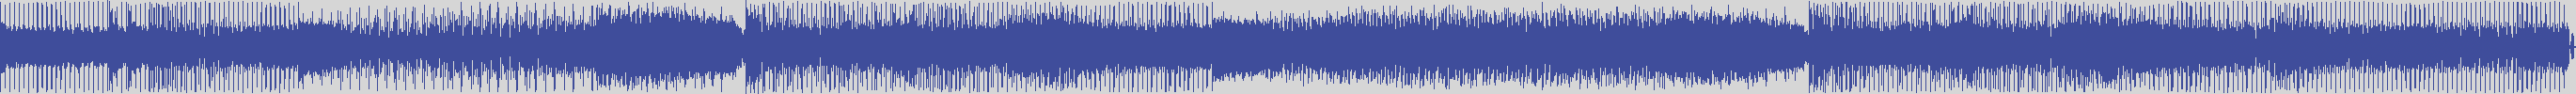 atomic_recordings [AR017] Alterego - Alterego [] audio wave form